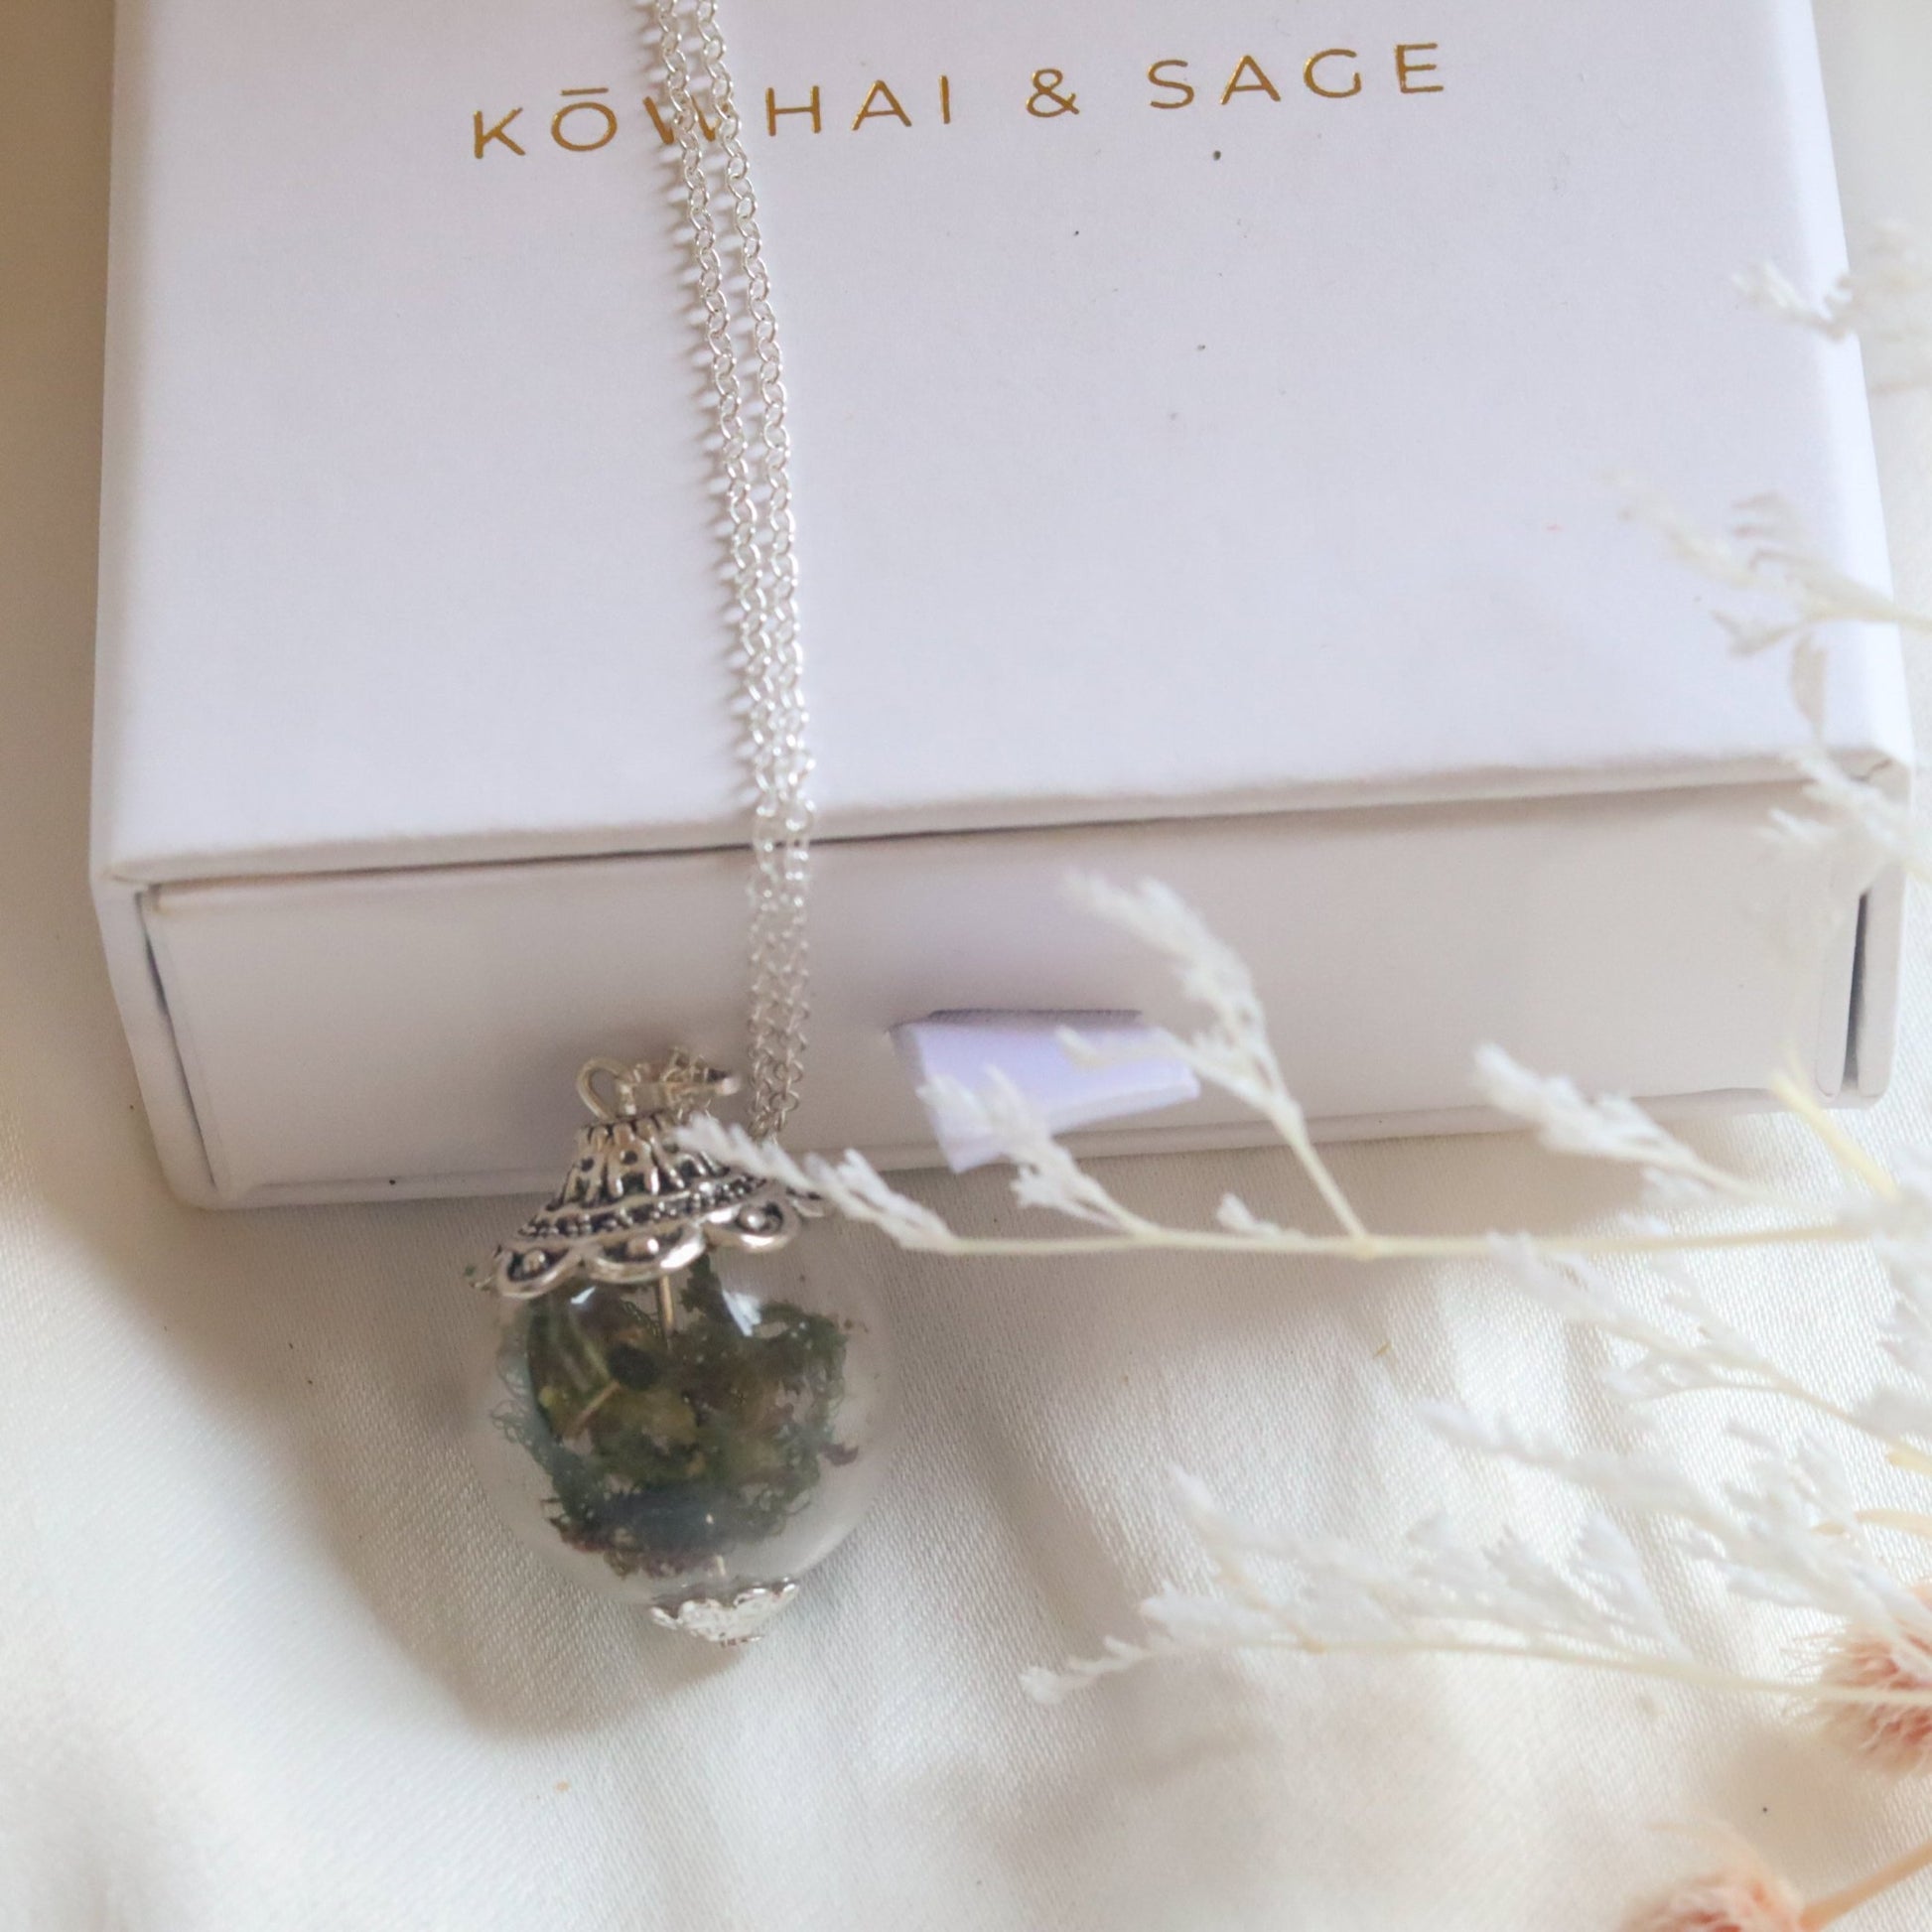 Dried Botanical Necklace - Kowhai and Sage